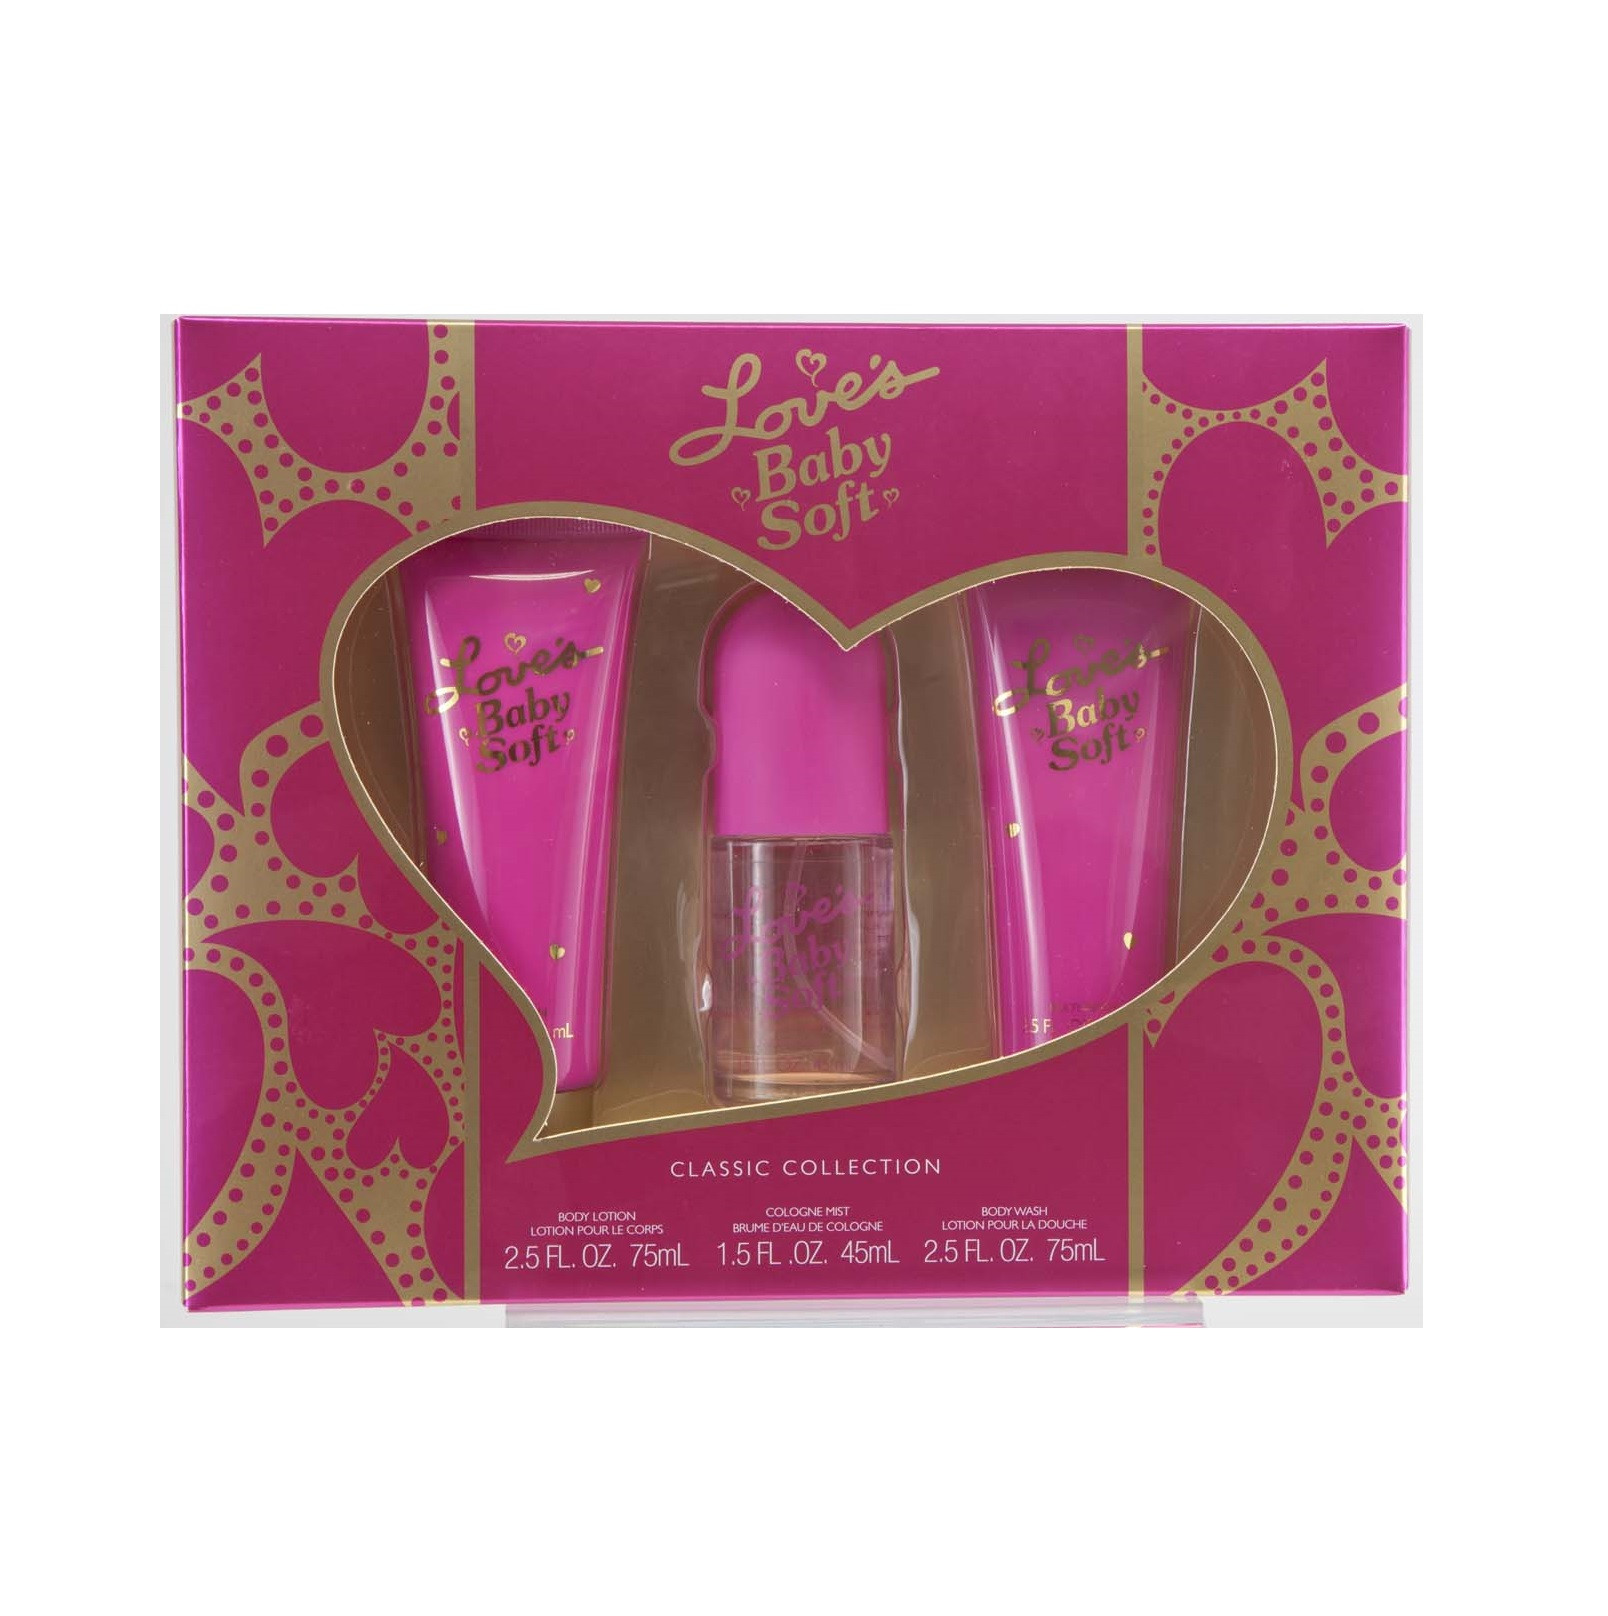 Loves Baby Soft Perfume Gift Set
 Love s Baby Soft 3 piece Fragrance Gift Set for Women